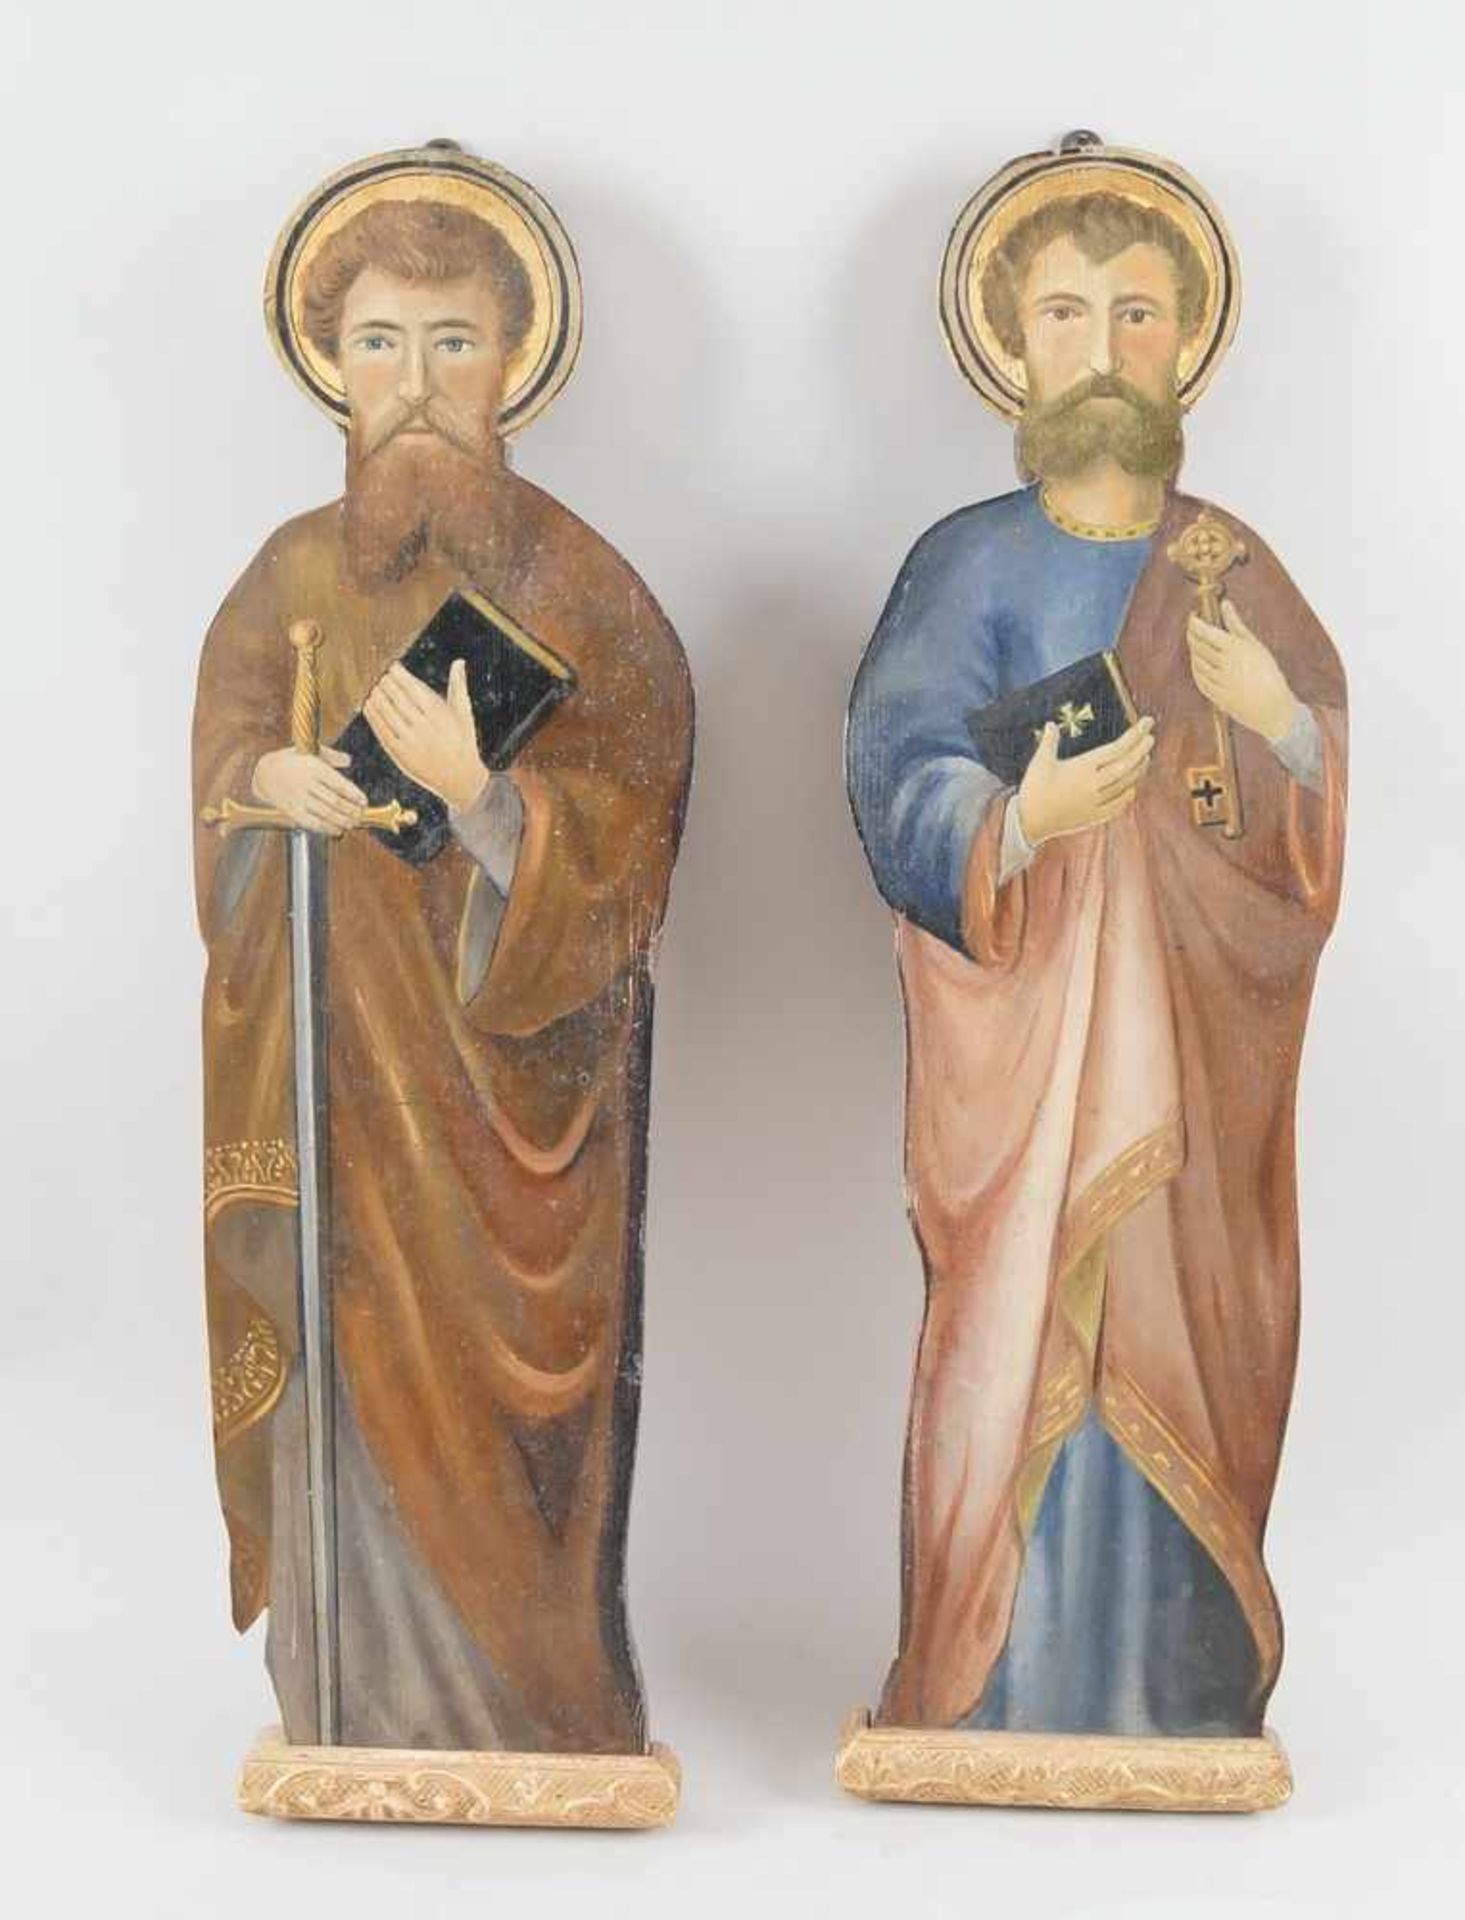 Peter und Paul, heiliger Petrus und Paulus, bemalte Holztafeln, 19. JH, geschnitzt, H 68cm- - -24.00